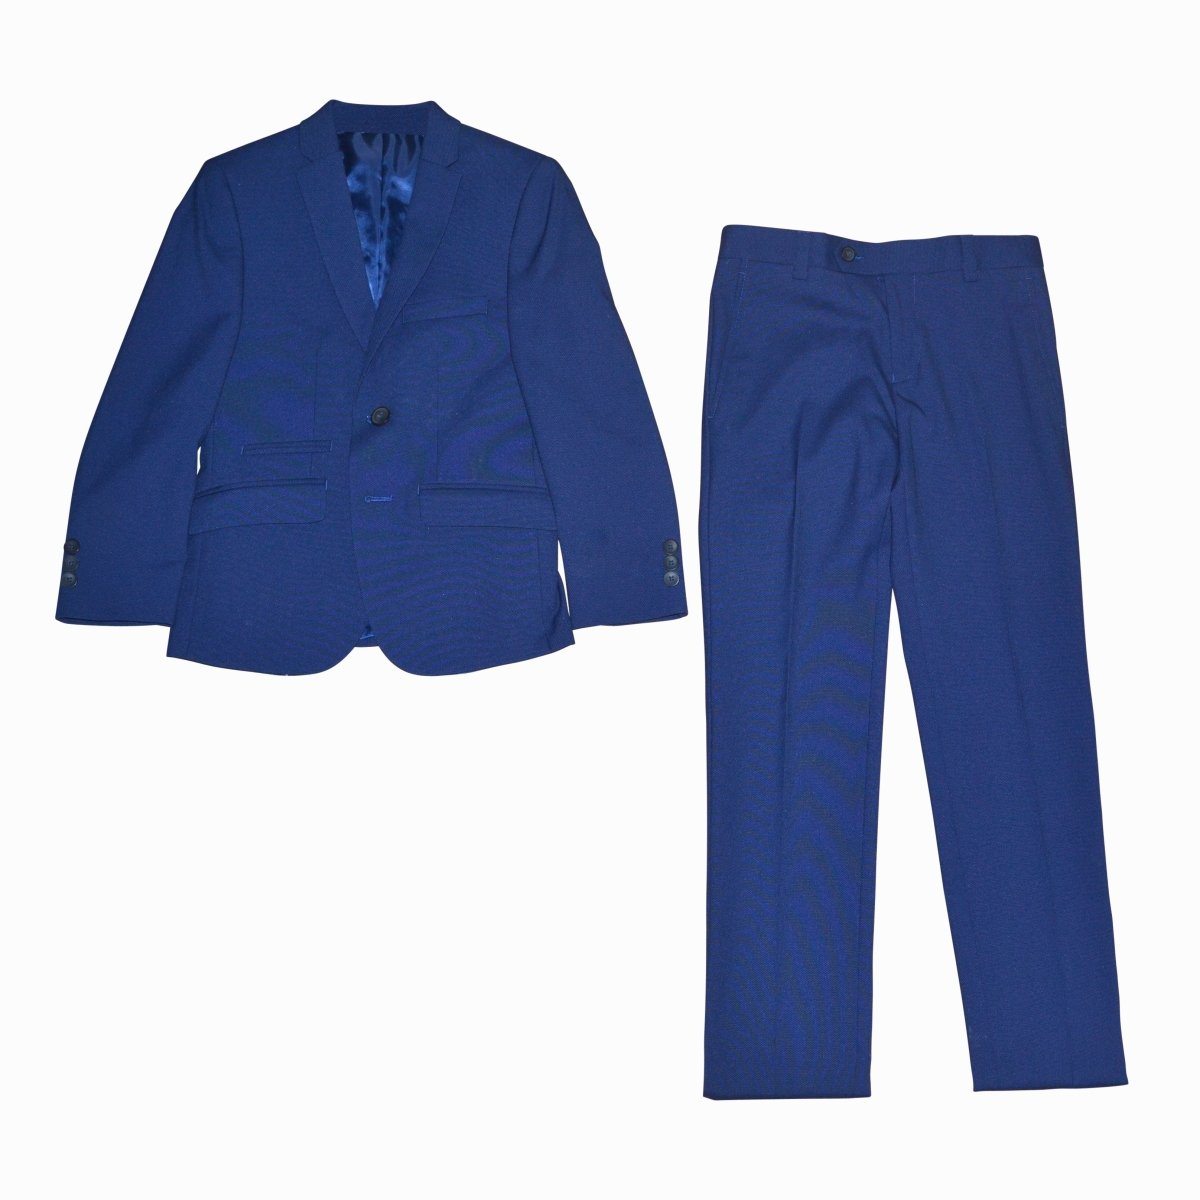 Marc New York Boys Skinny Blue Suit W0324 Suits (Boys) Marc New York 